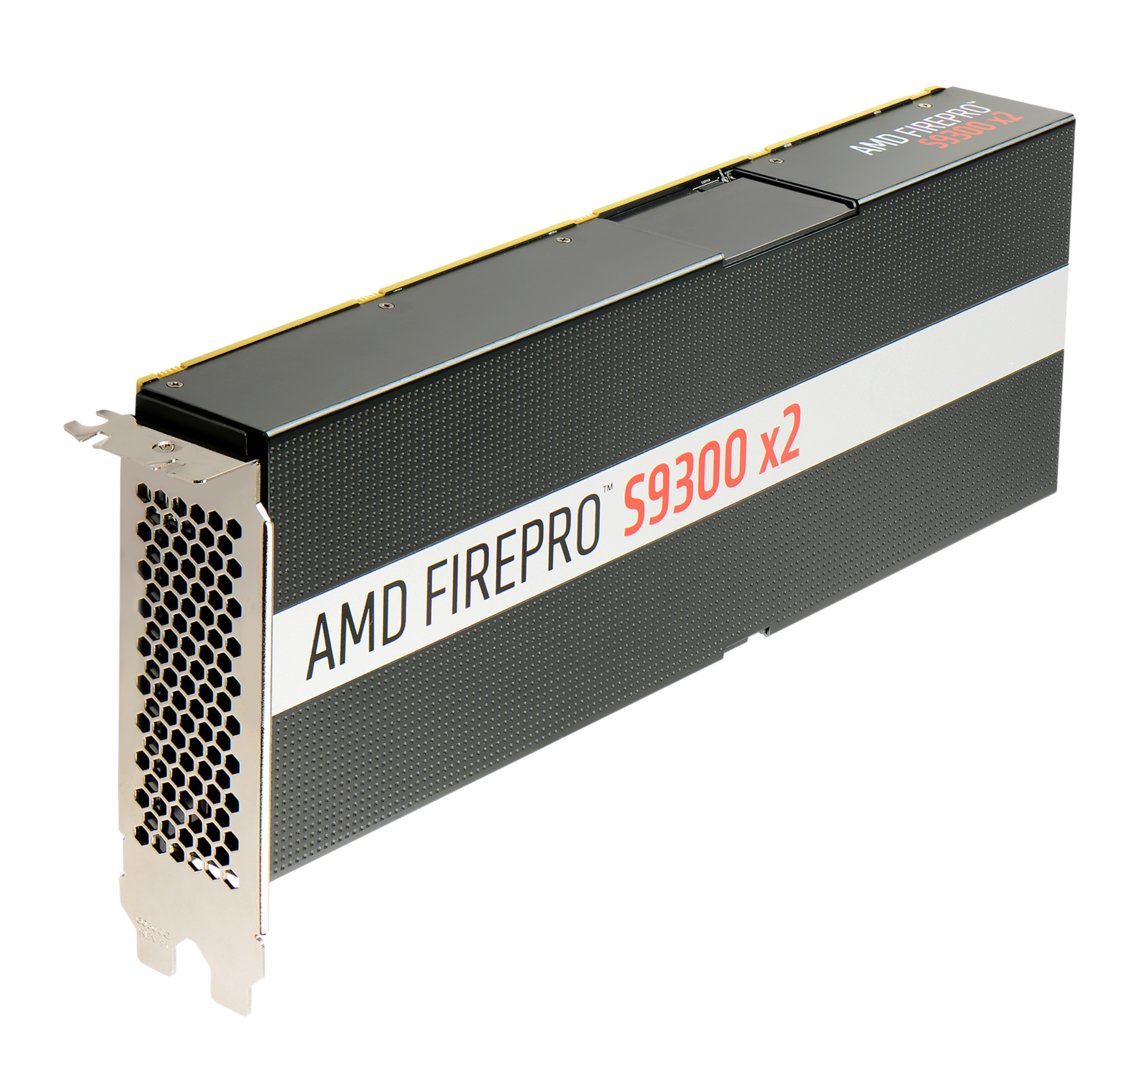 AMD FirePro S9300 X2